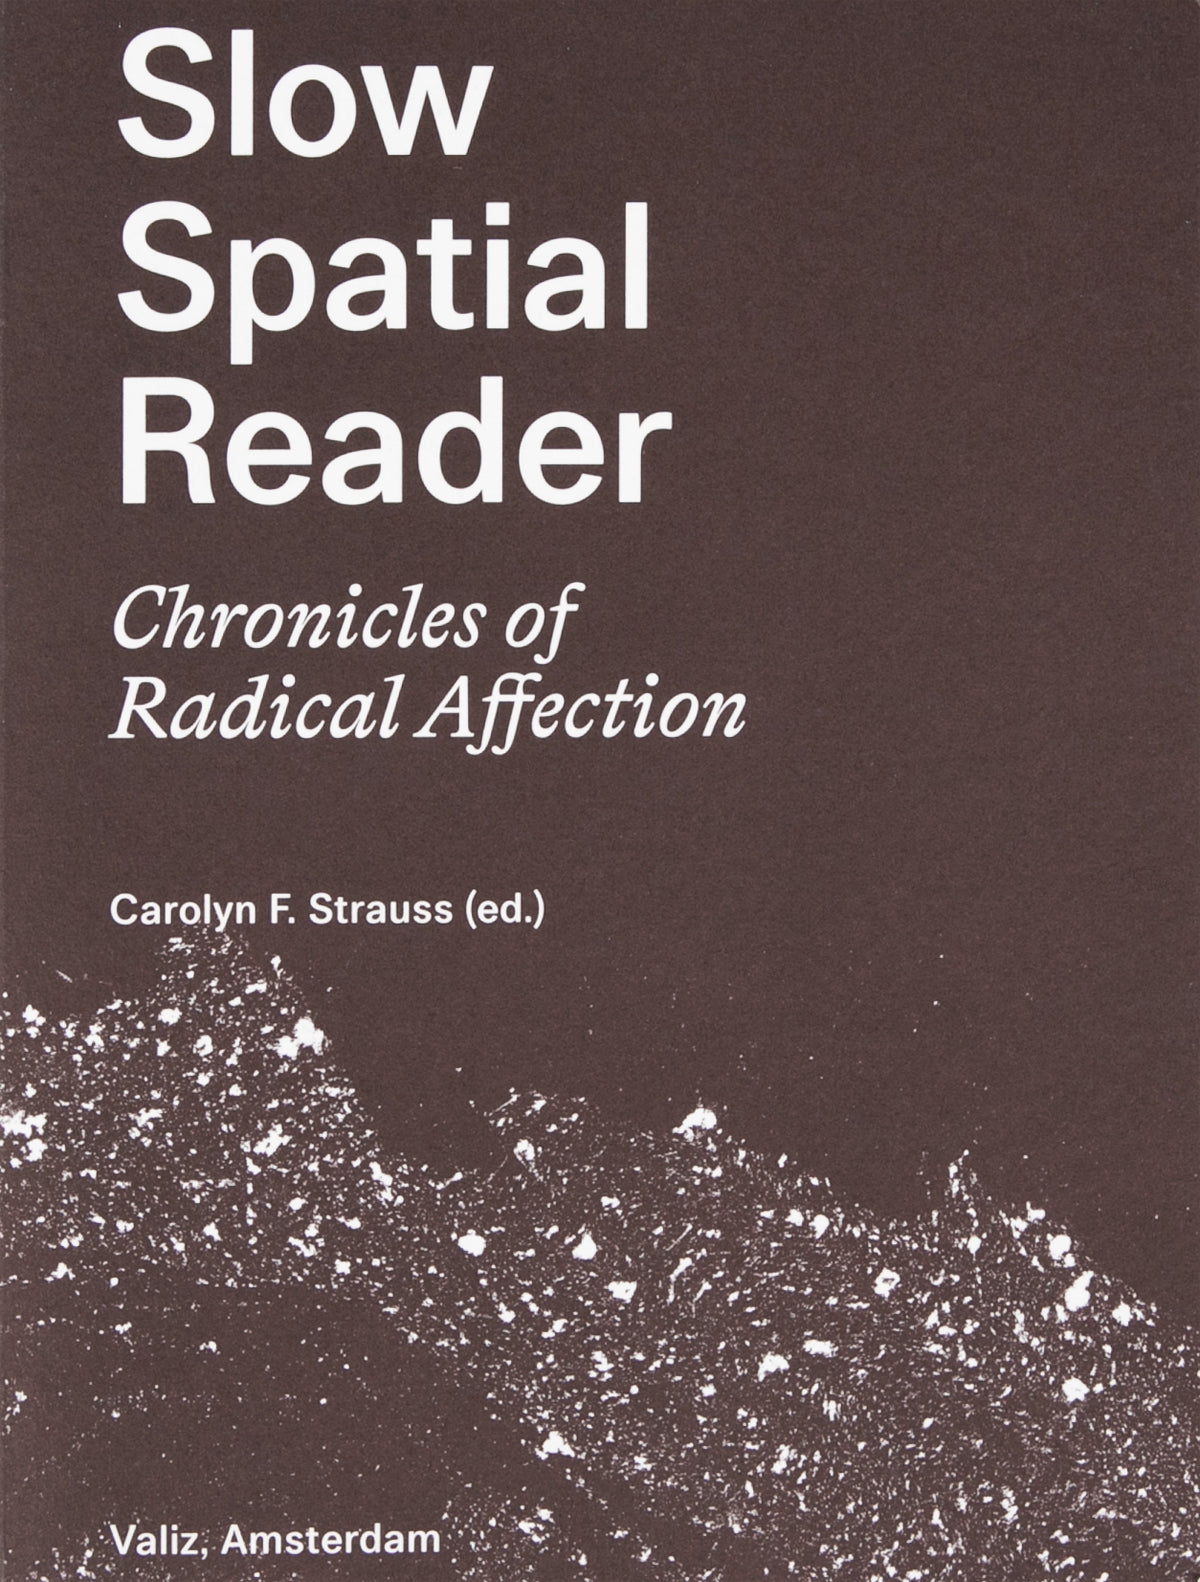 Slow Spatial Reader